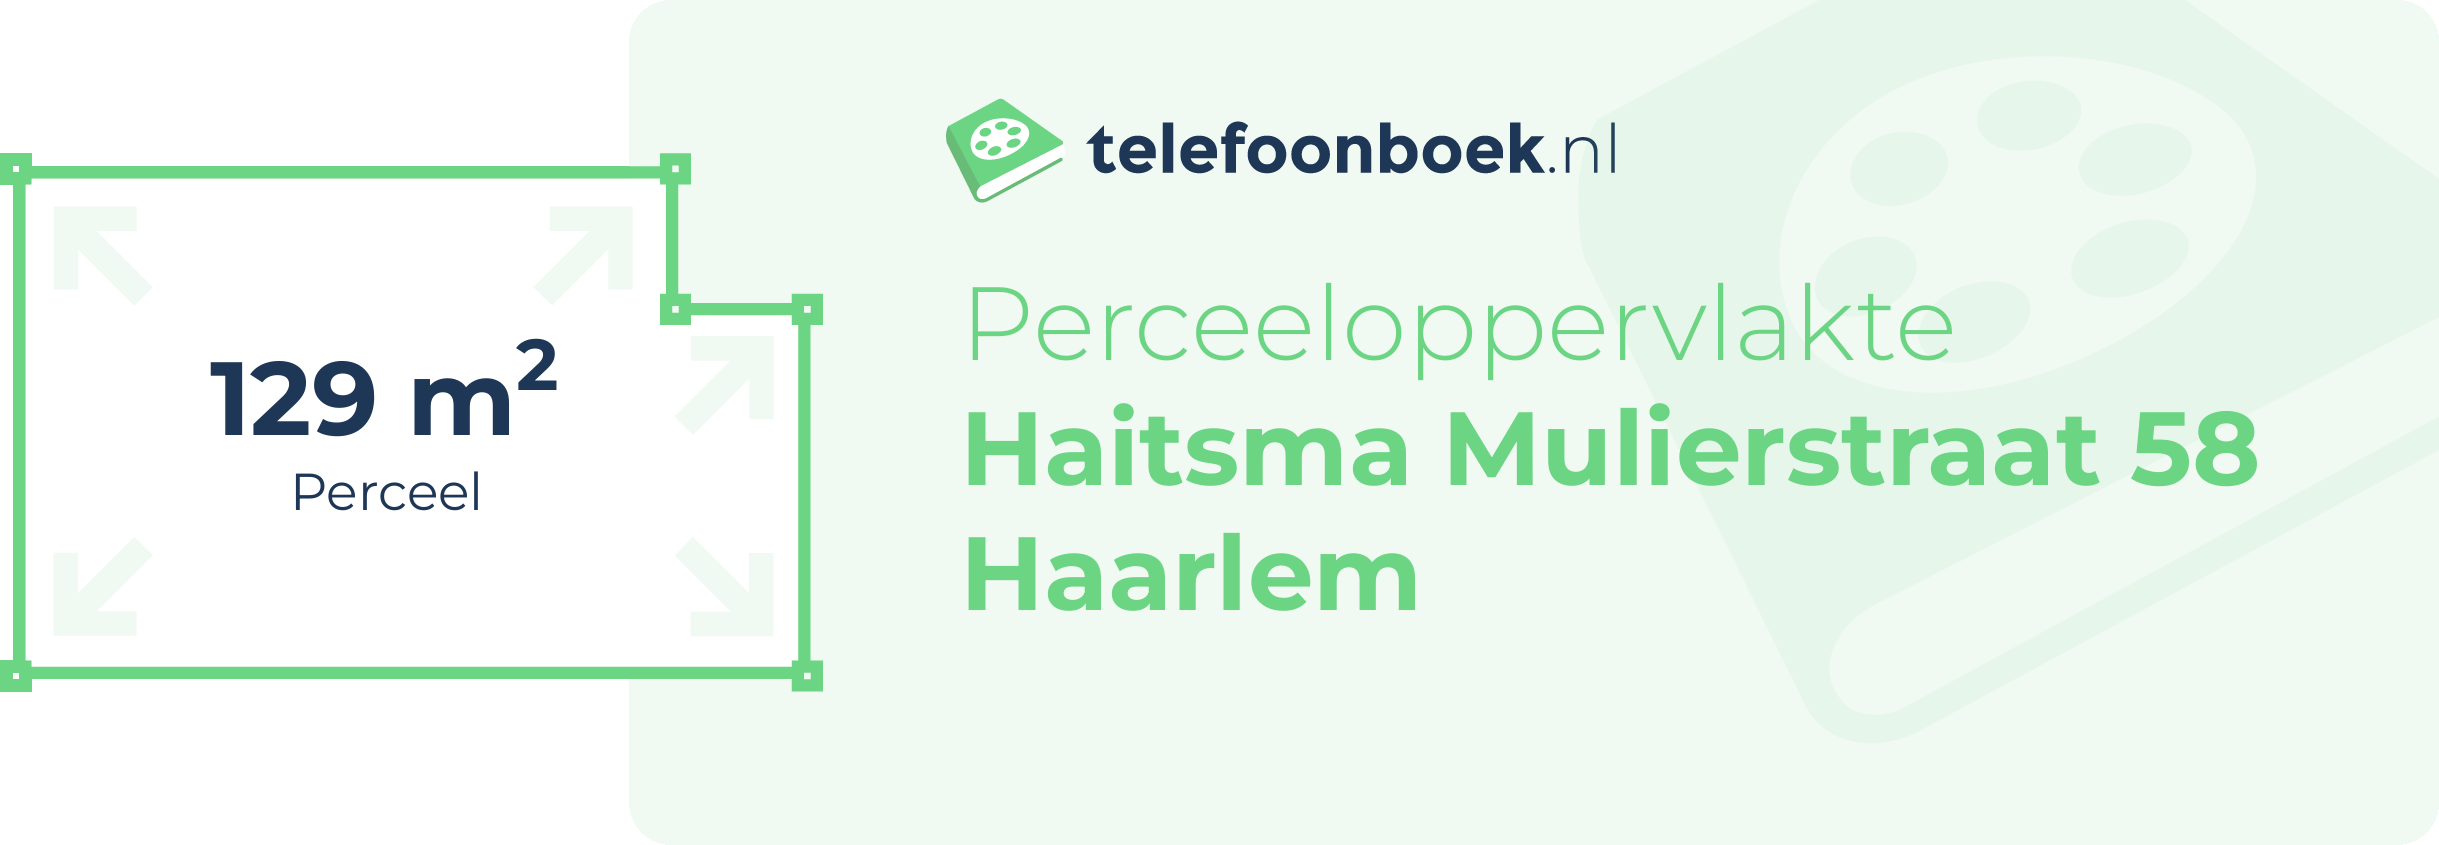 Perceeloppervlakte Haitsma Mulierstraat 58 Haarlem